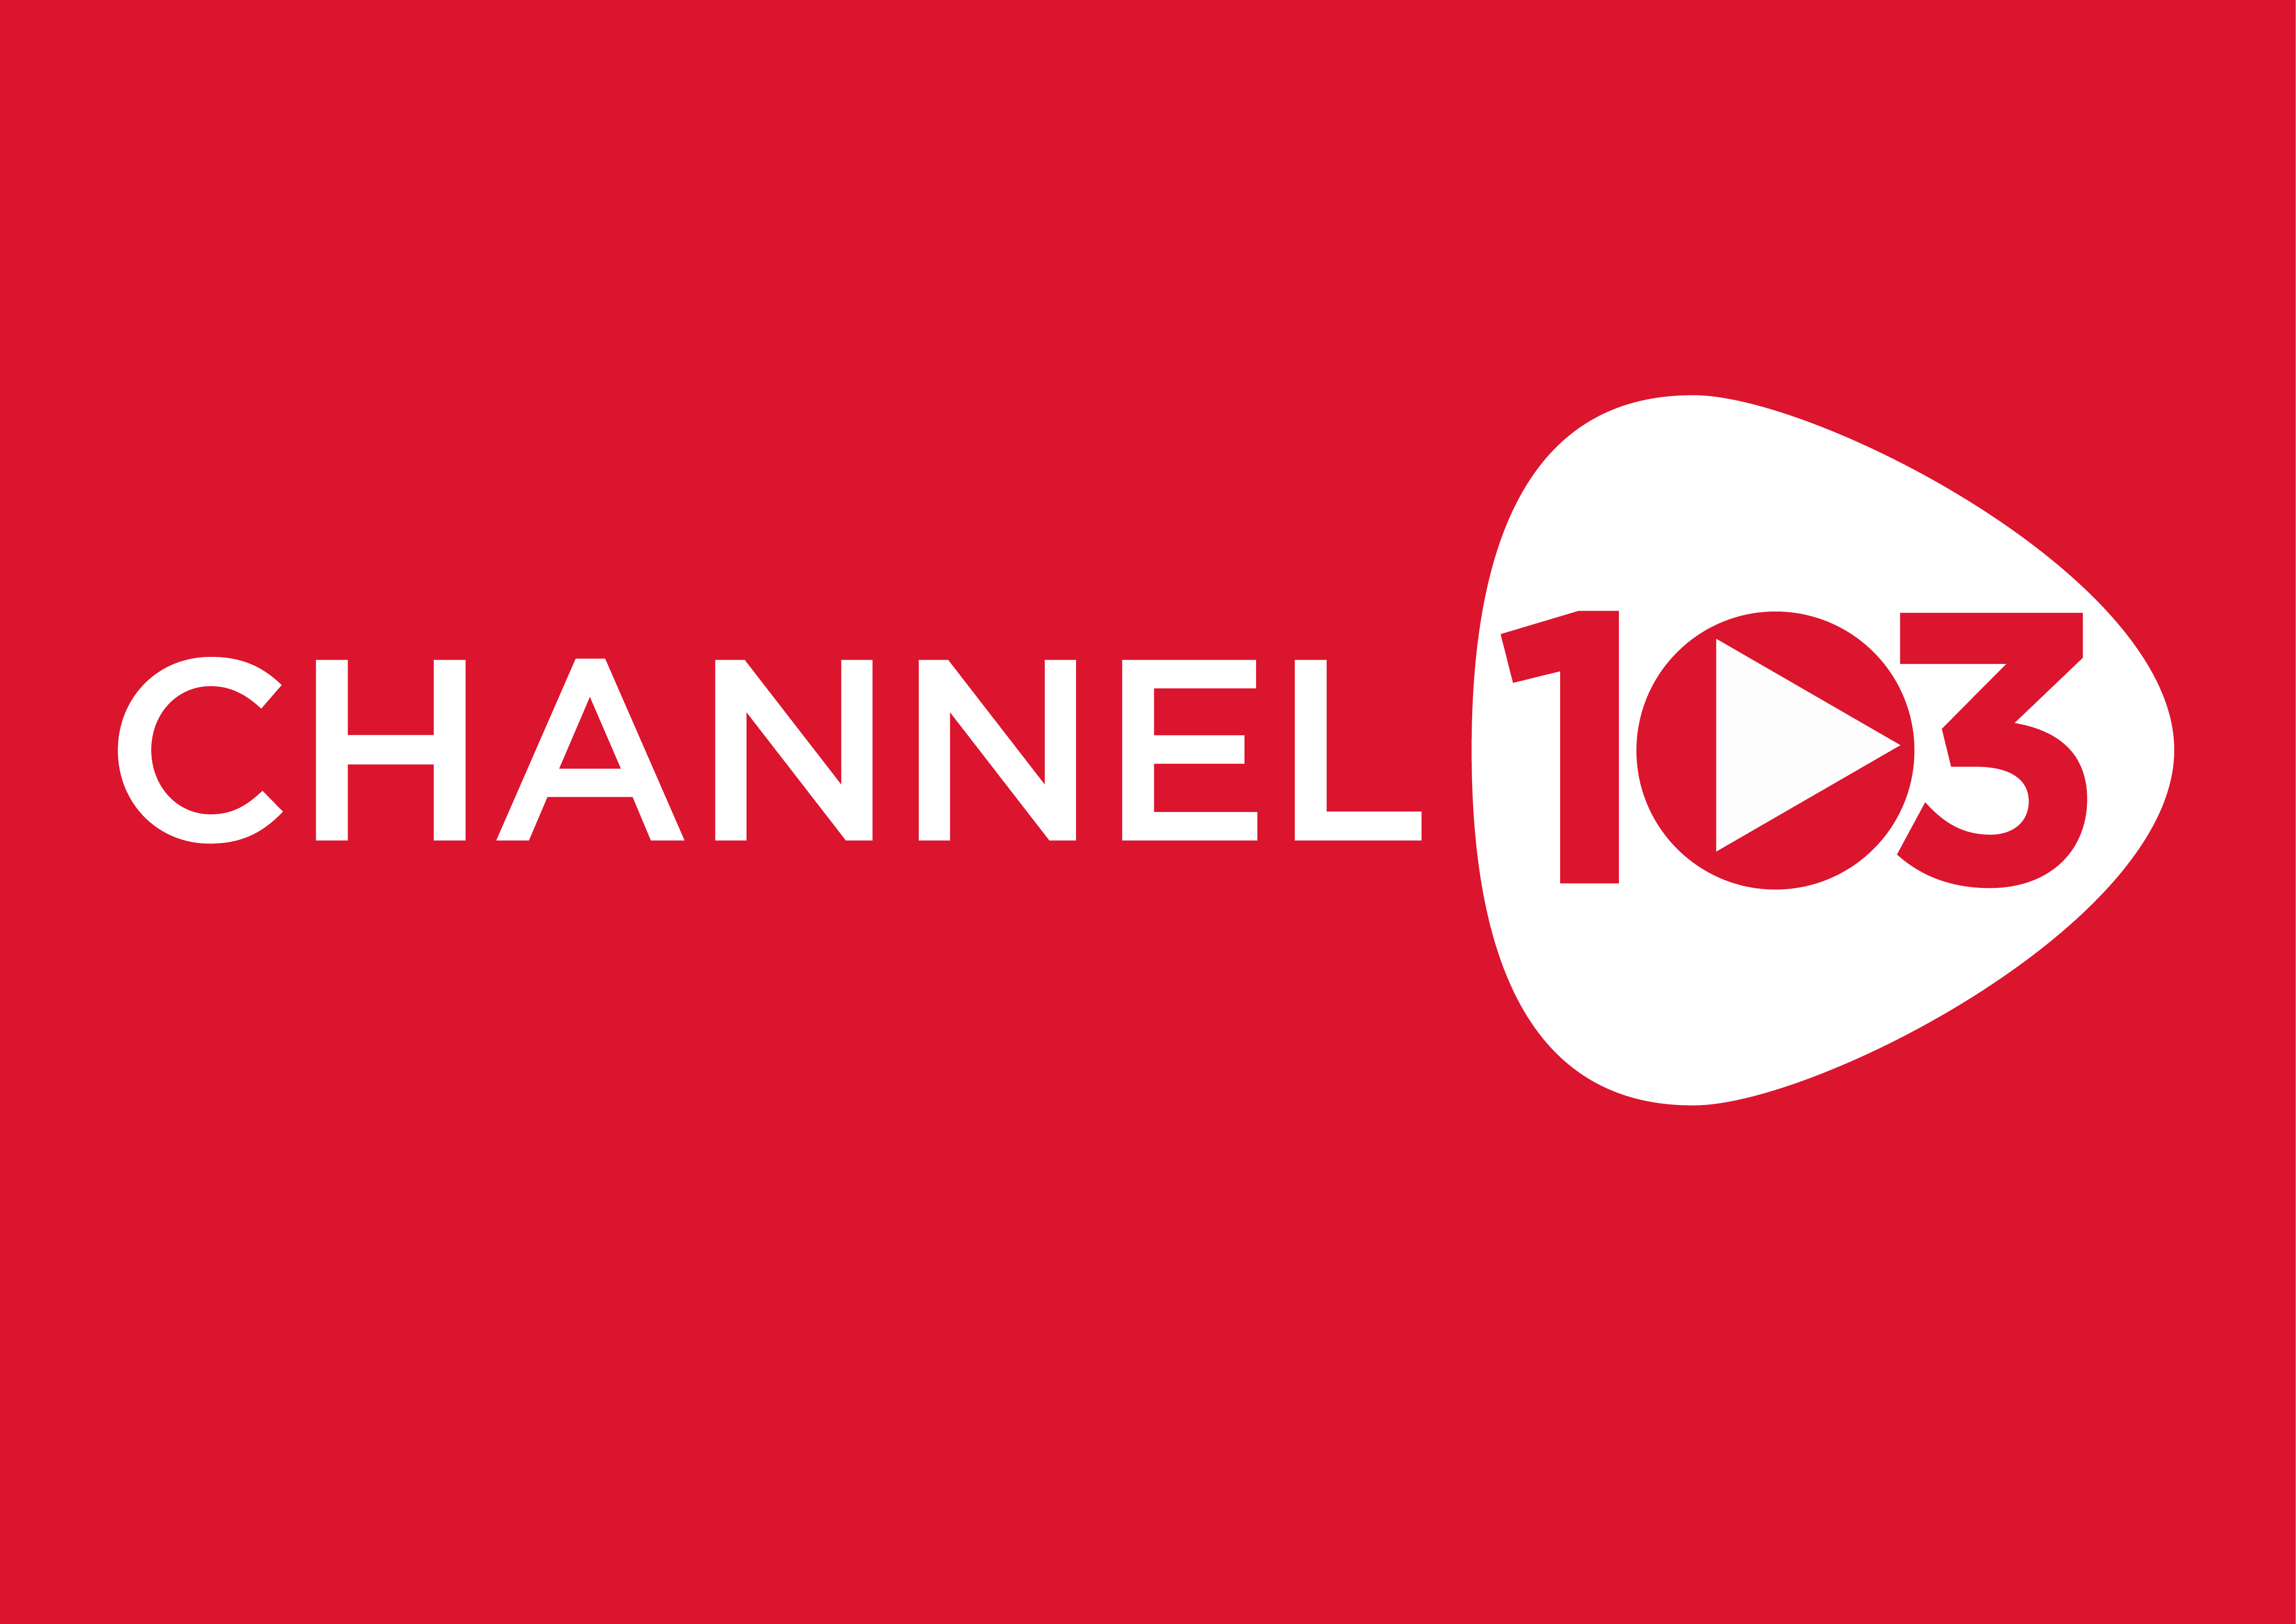 channel 103 jersey news